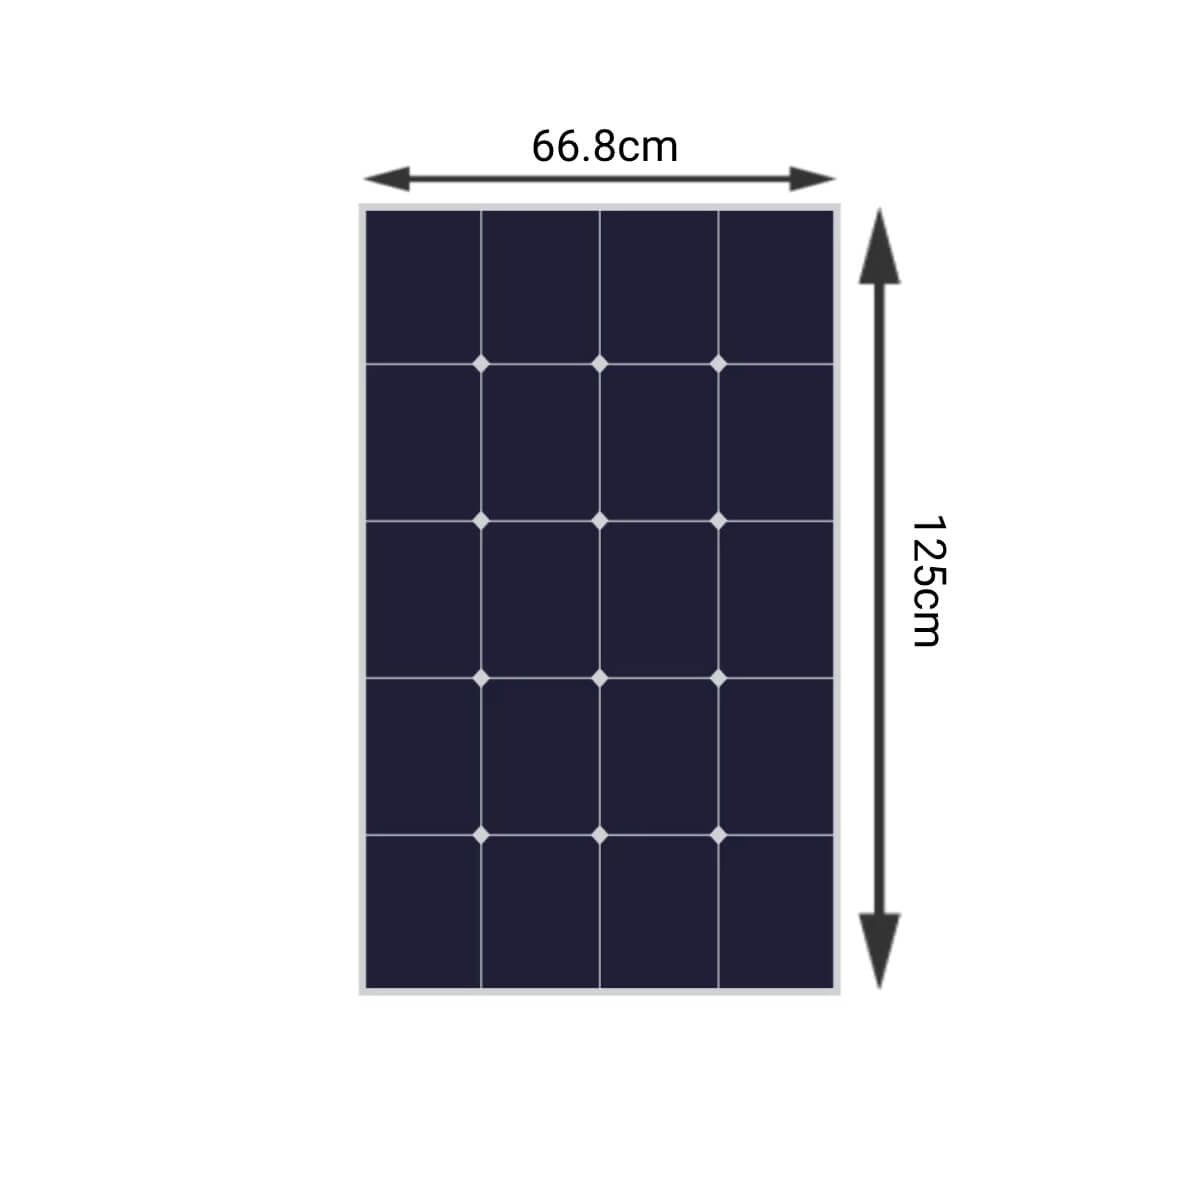 560W Solar Panel Kit – 4x 140W dimensions